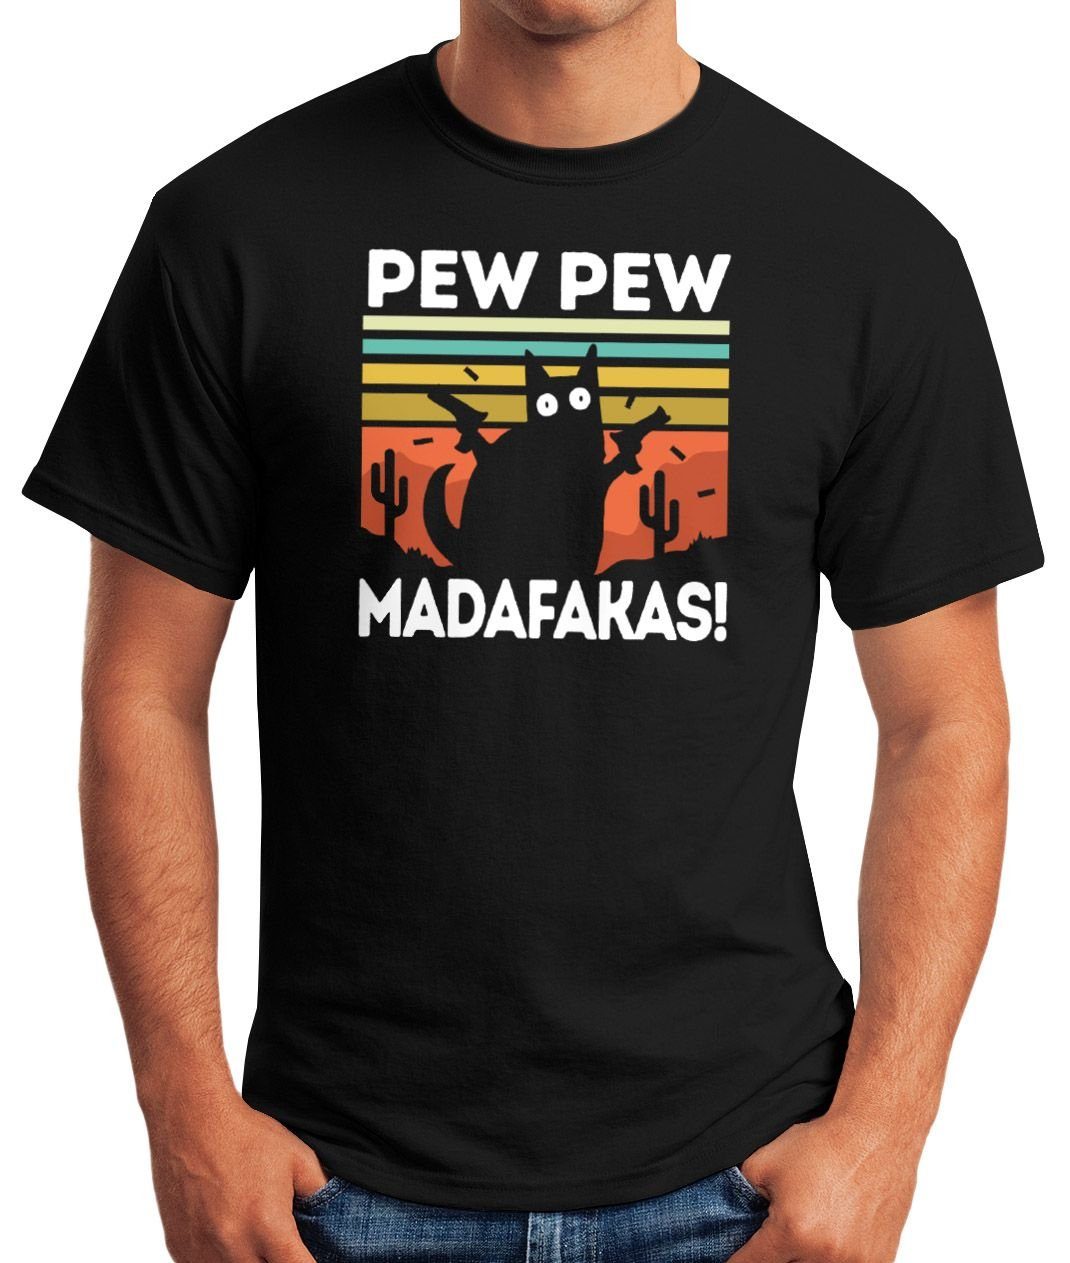 Print Moonworks® Meme Madafakas! lustig Spruch T-Shirt Fun-Shirt Katze schwarze Pew mit Print-Shirt Pew MoonWorks Herren